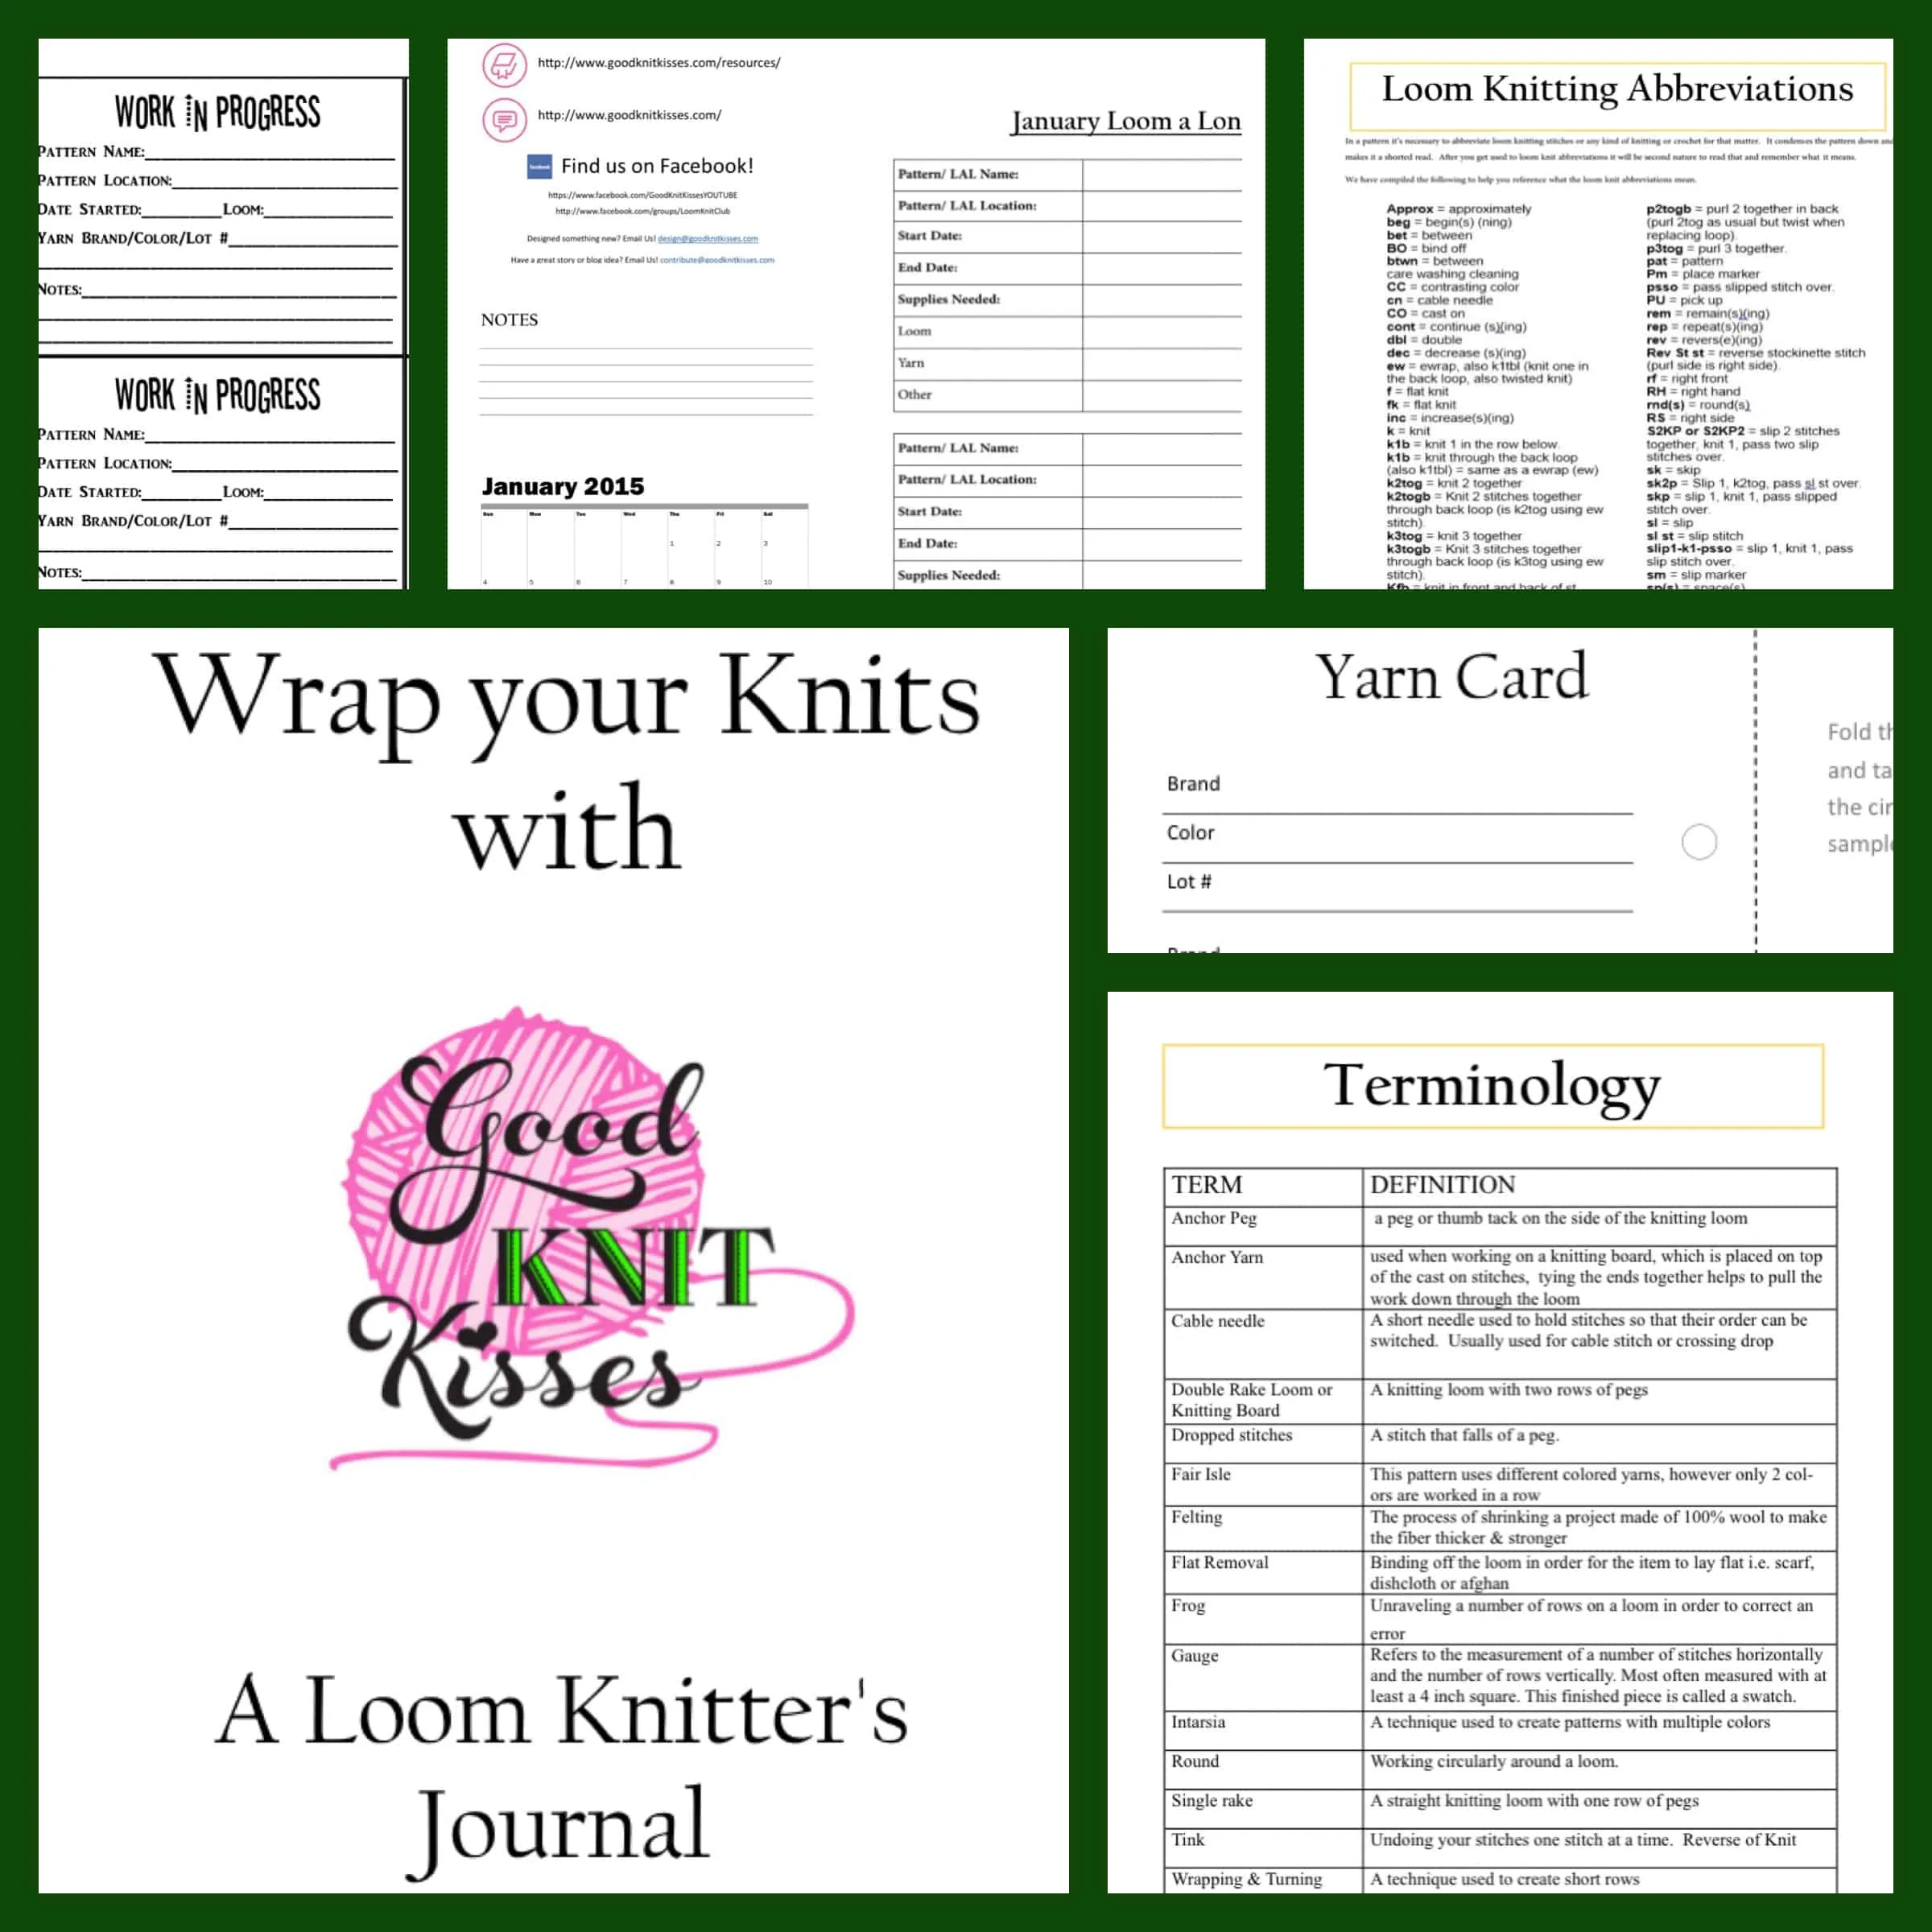 A Loom Knitters Journal - GoodKnit Kisses